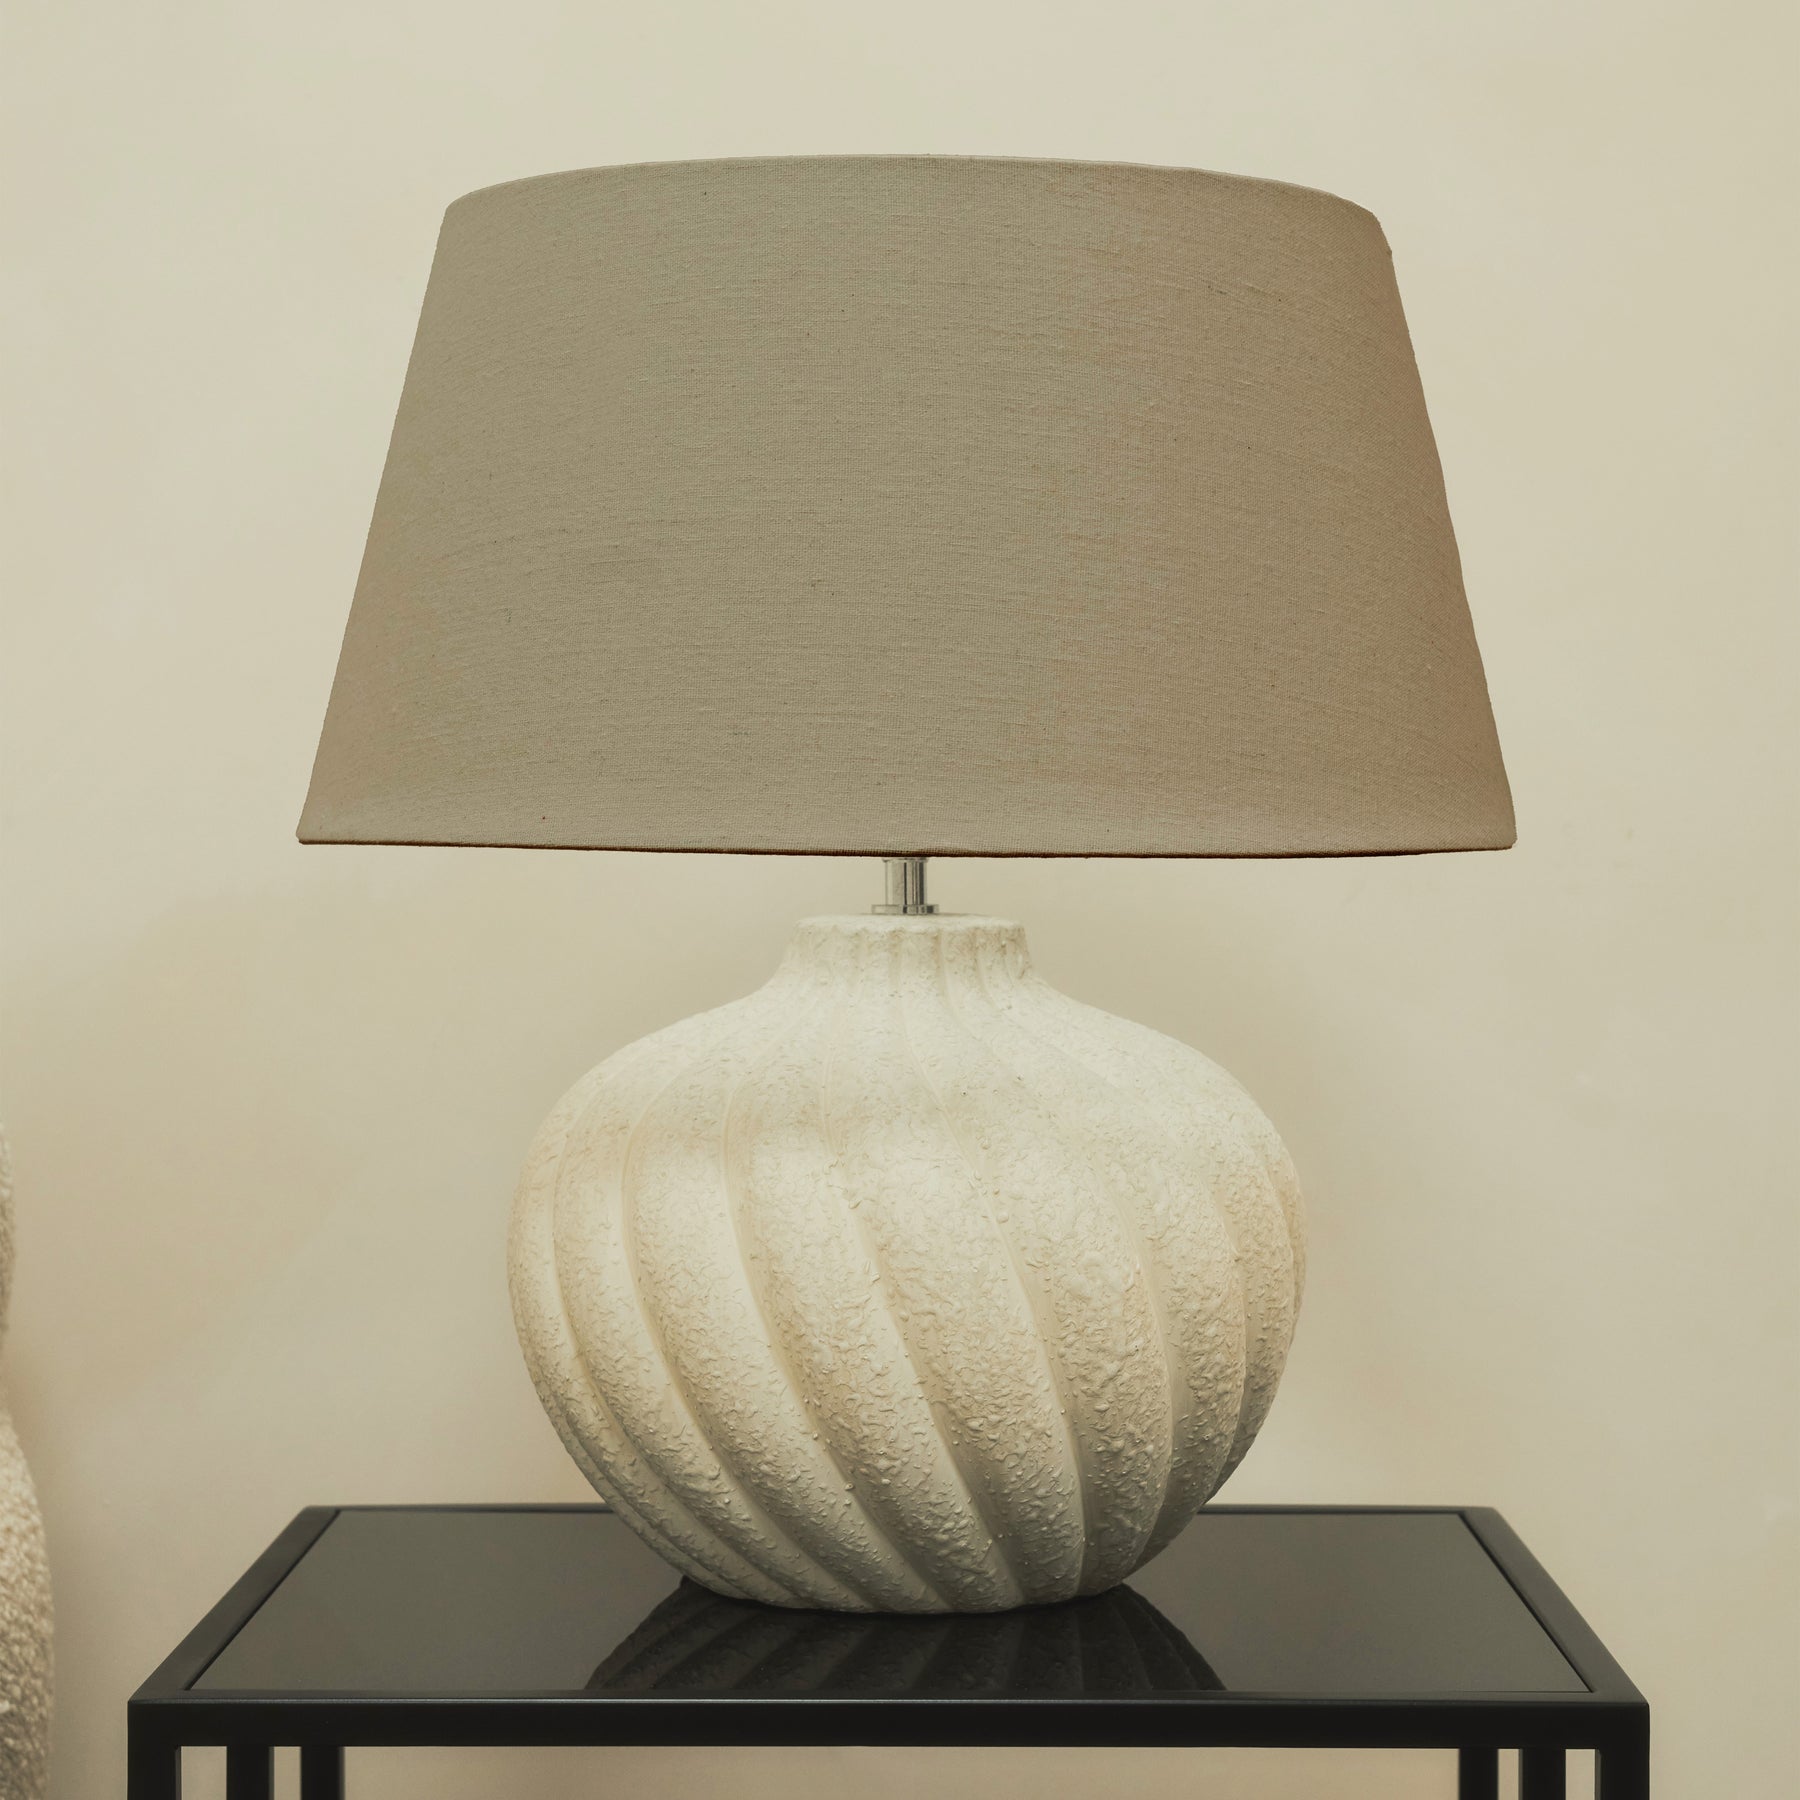 Caprera - Textured Ceramic Based Table Lamp Beige Shade